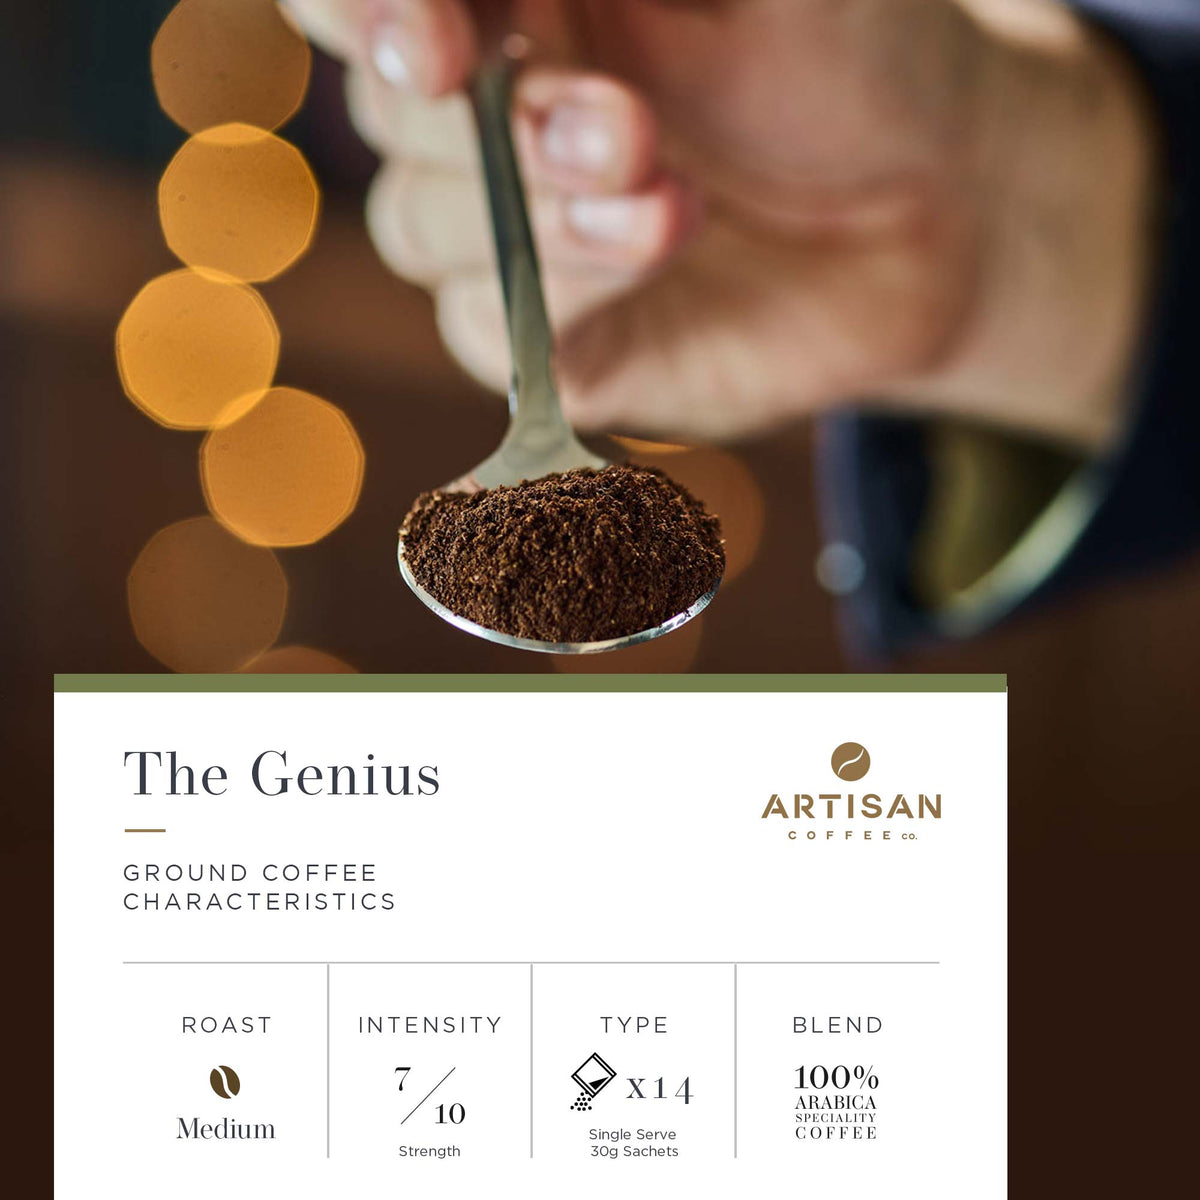 Artisan Coffee Co The Genius ground coffee Infographic characteristics